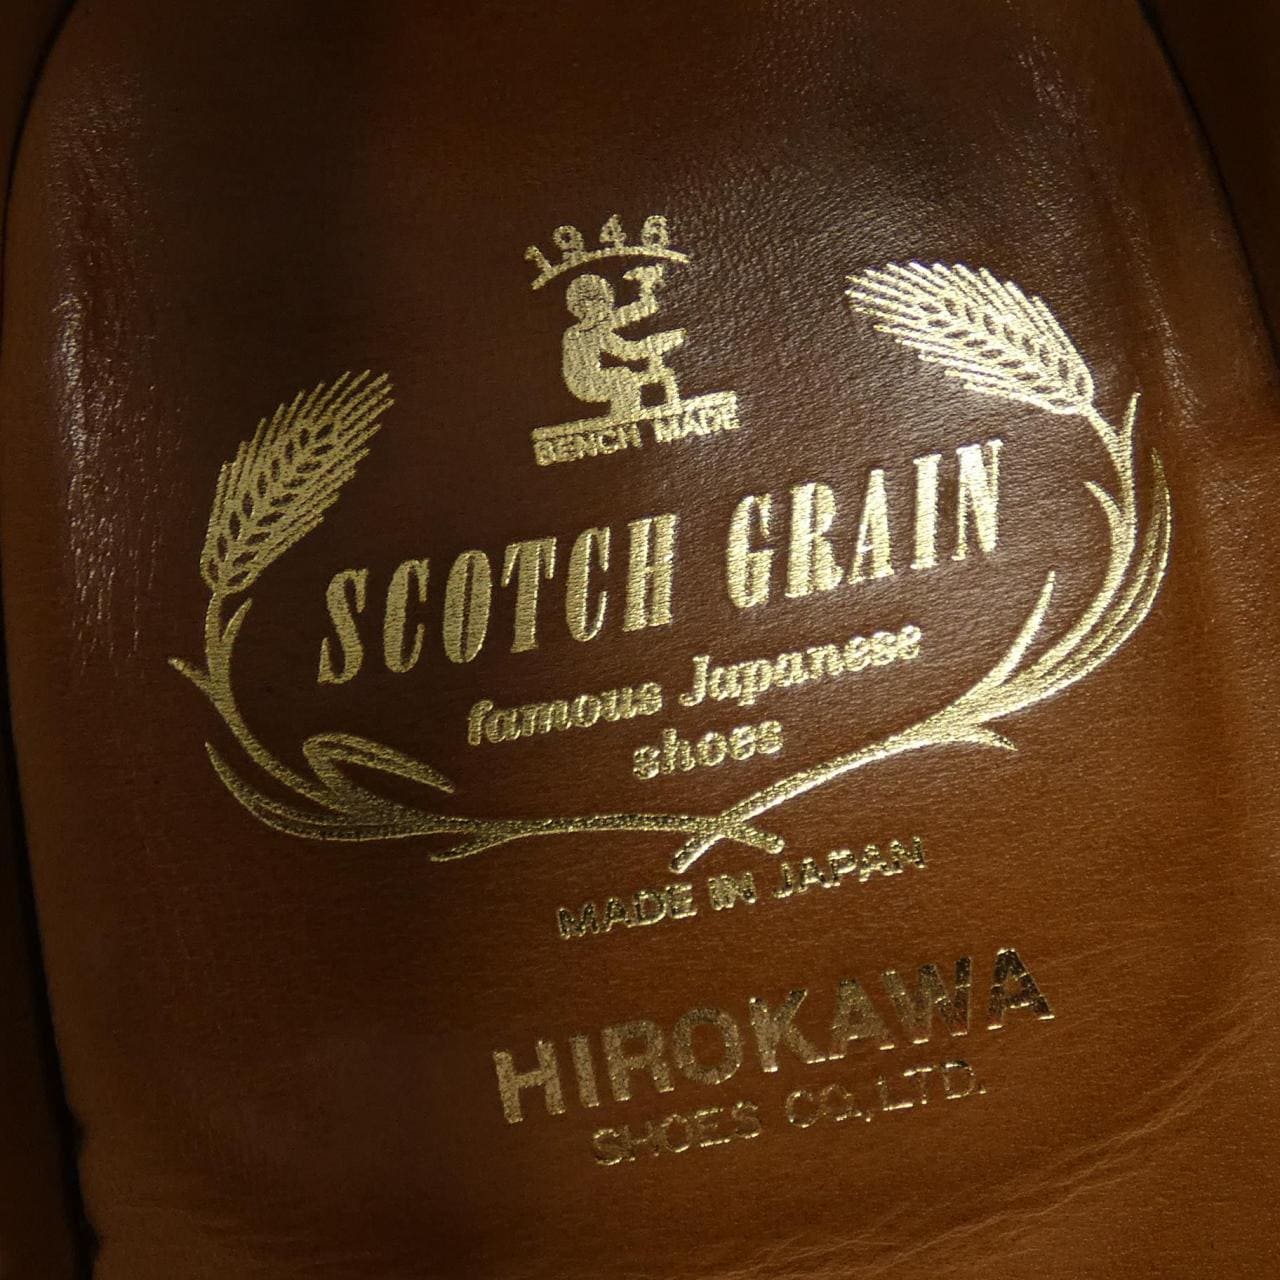 Scotch grain SCOTCH GRAIN dress shoes